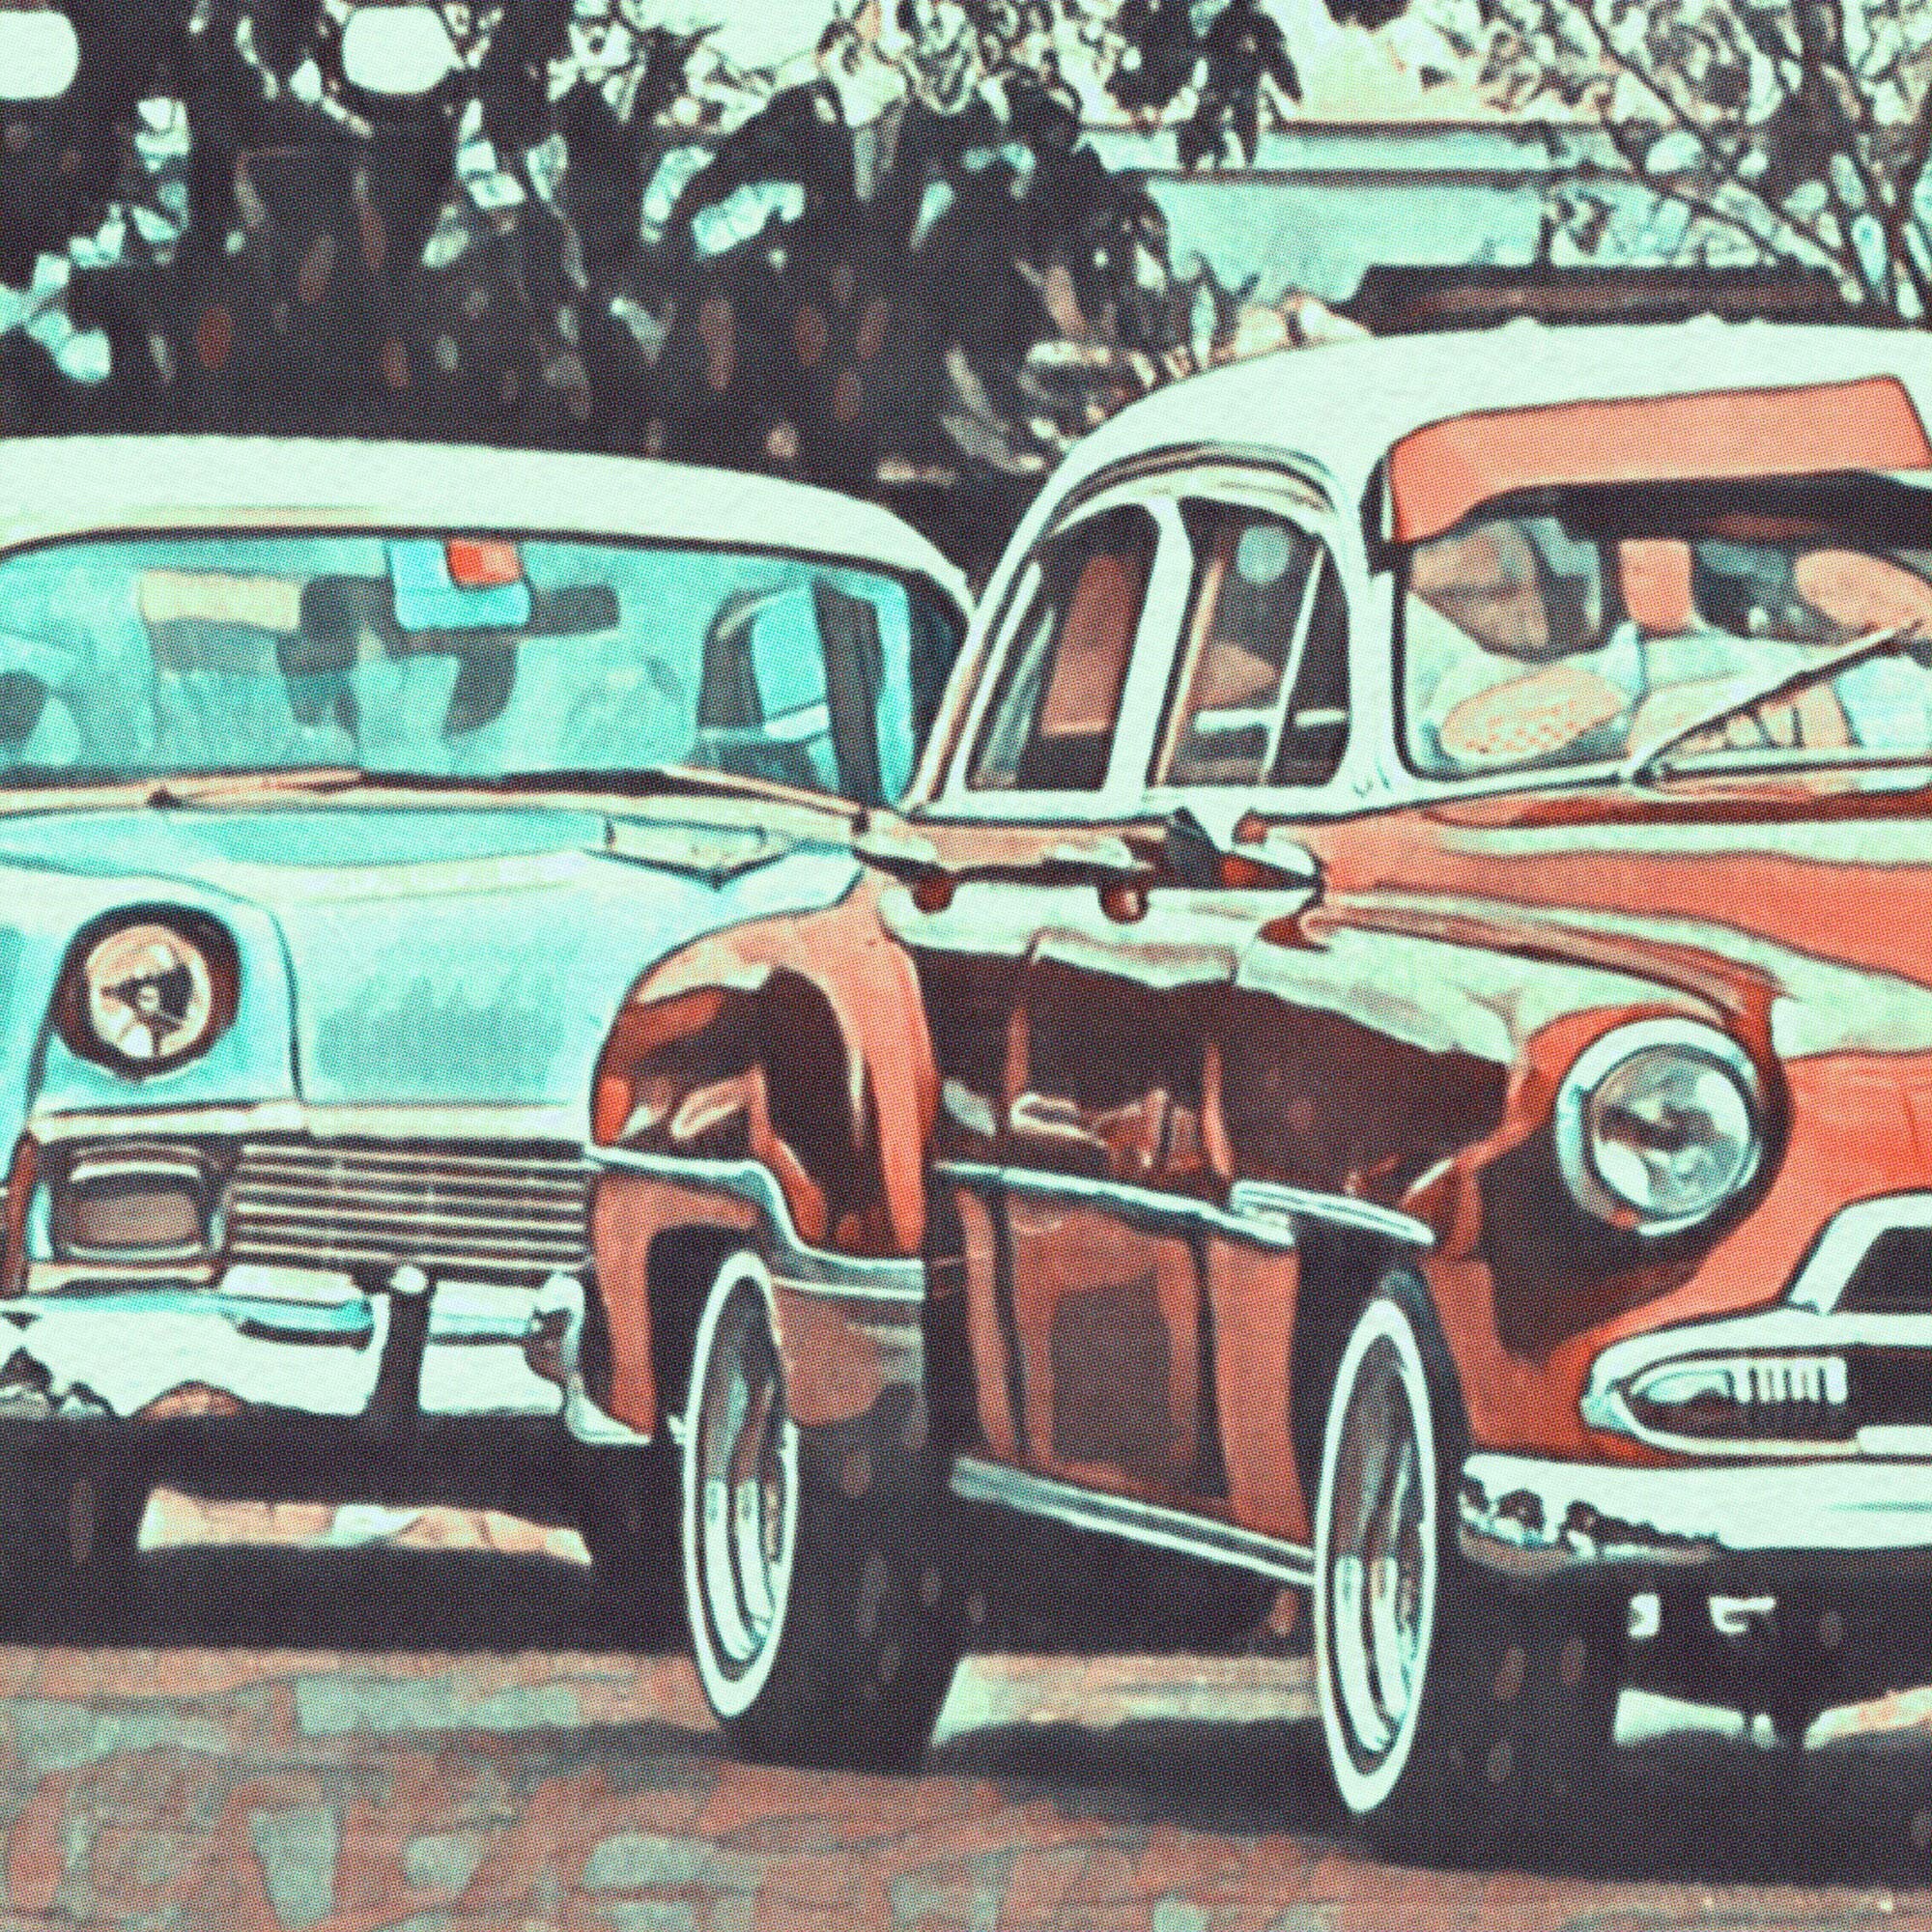 Póster Autos de Cuba N.5